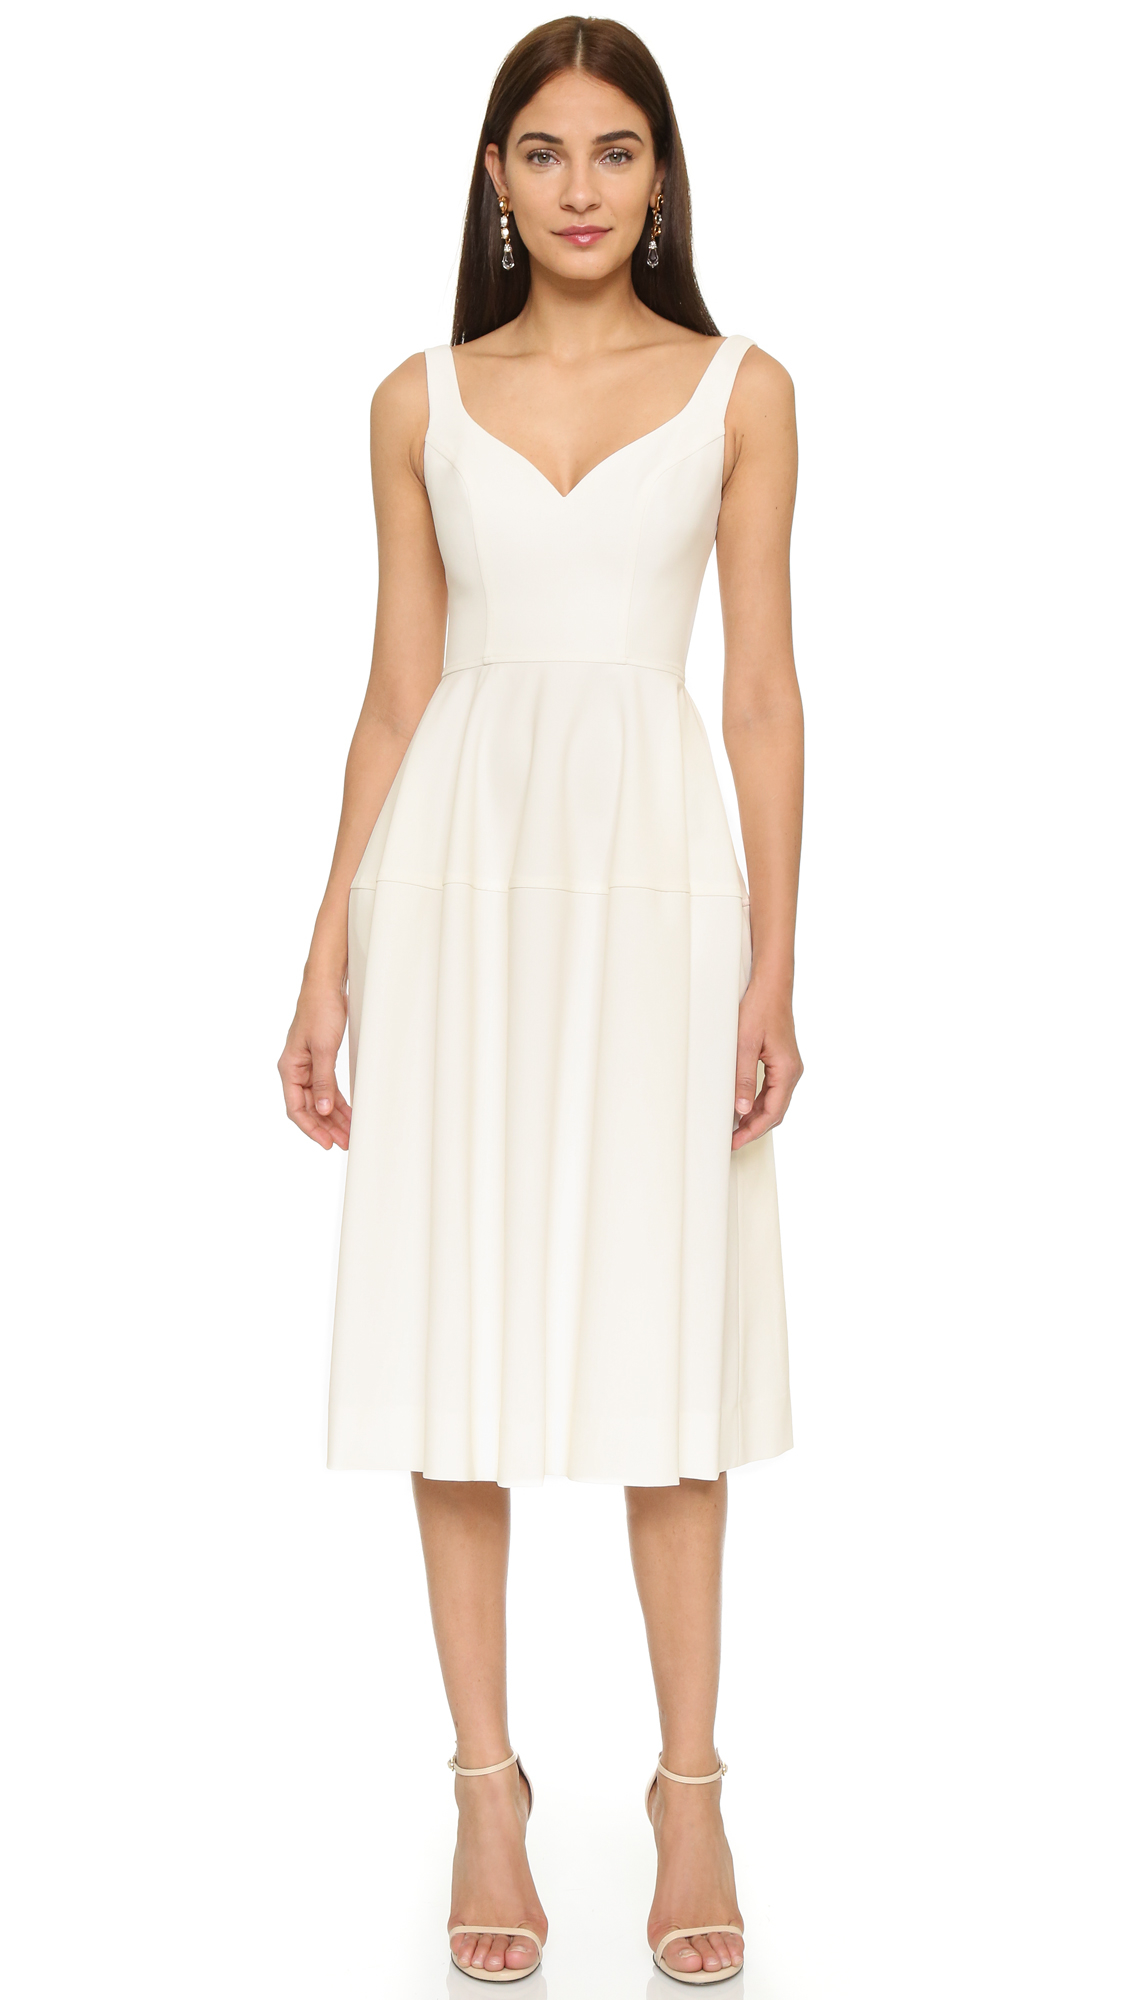 Lyst - Jill Jill Stuart Sweetheart Fit And Flare Dress in White